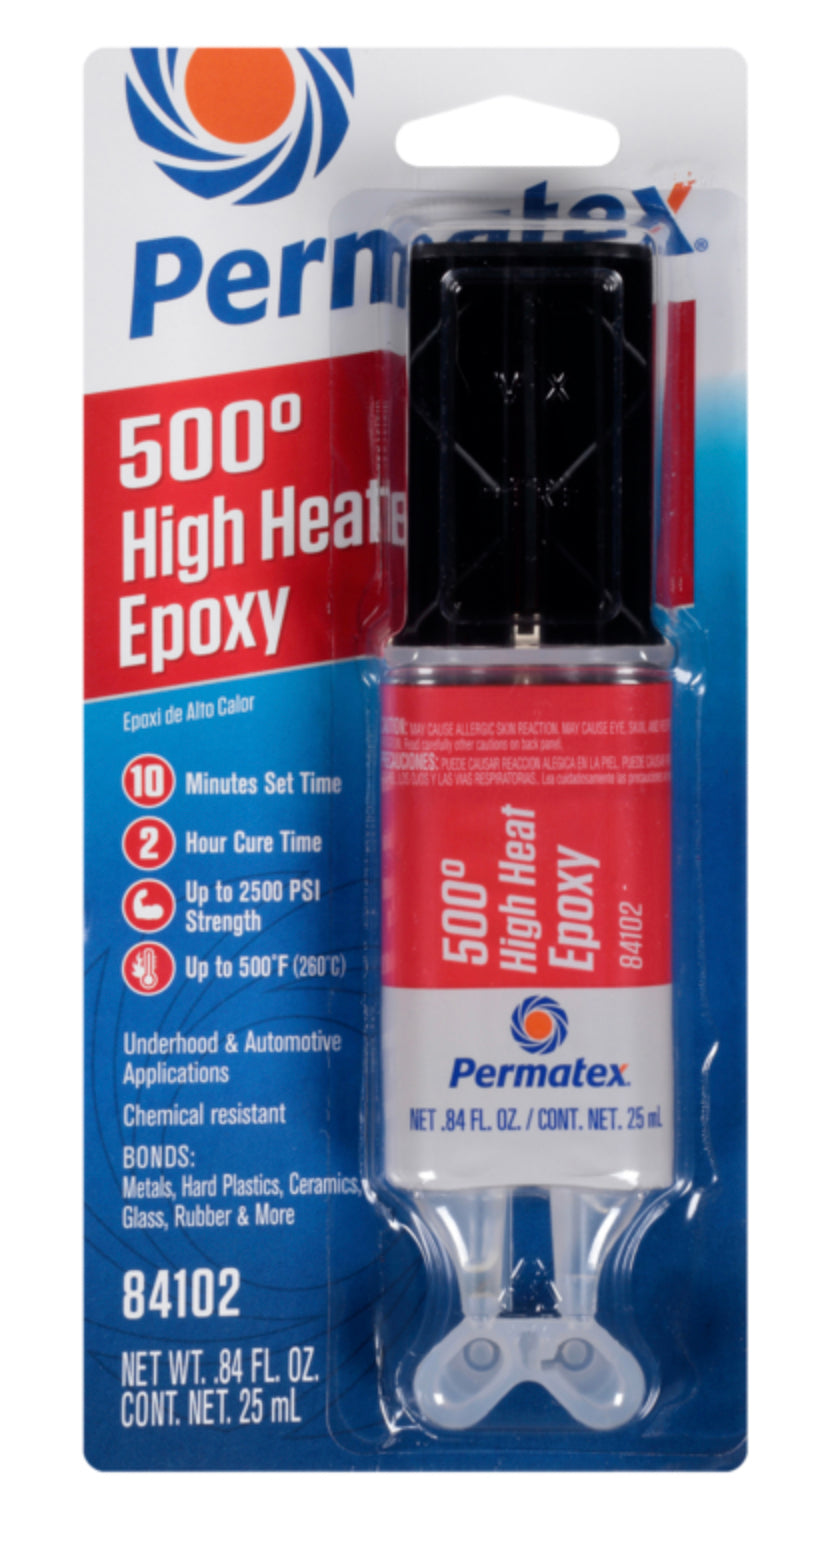 Permatex 500 Degree High Heat Epoxy 25ml. Sealers, Gasket Makers and Glues Epoxies main image